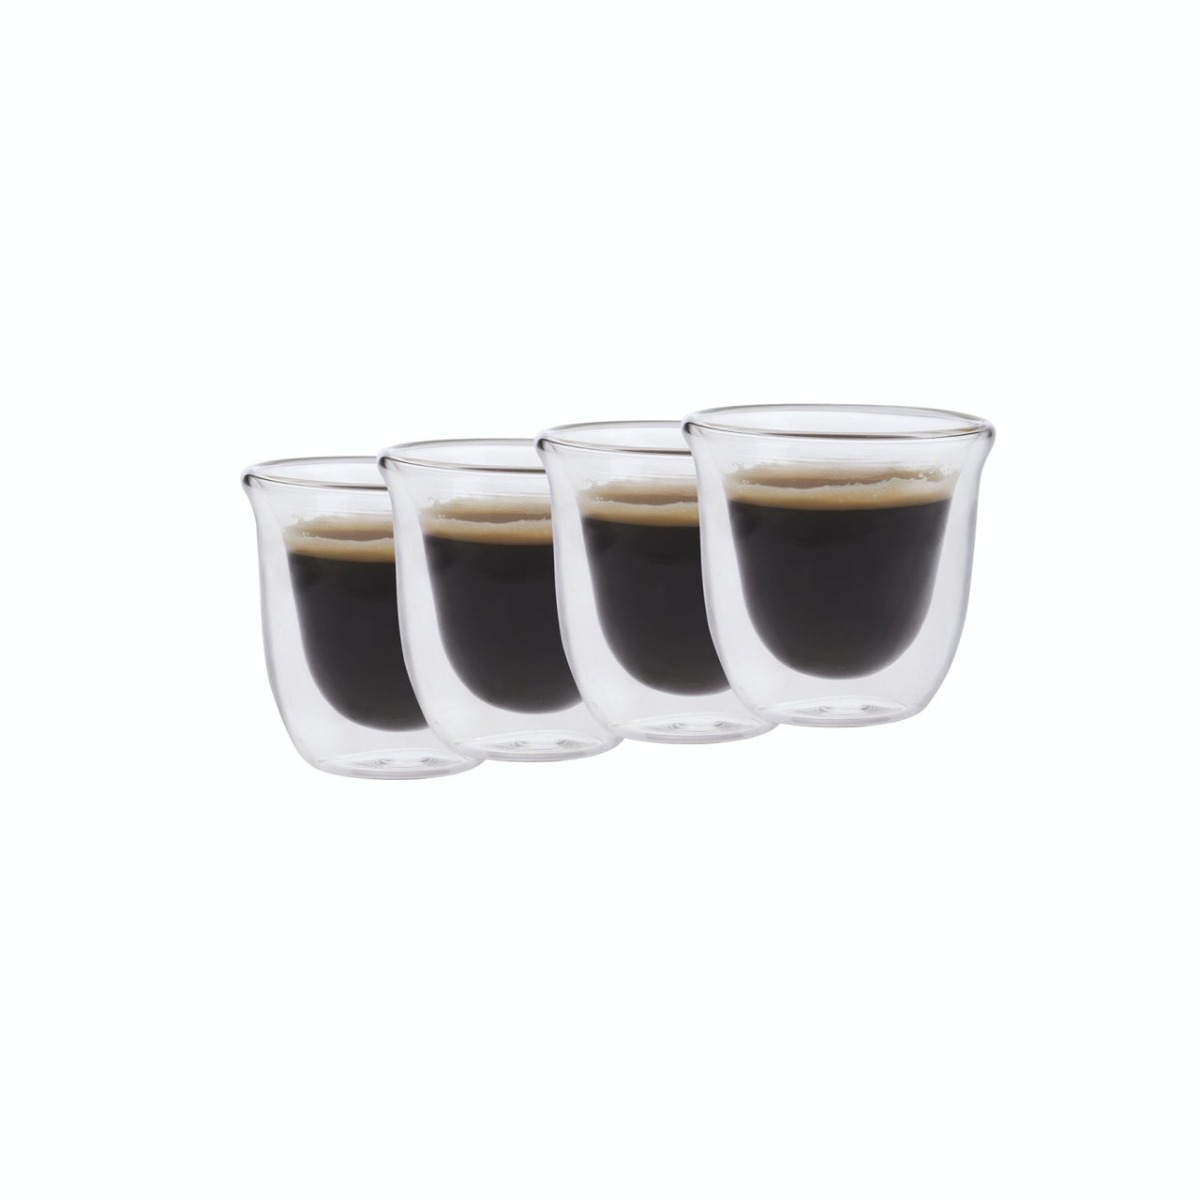 La Cafetière Dubbelwandige Espresso Glazen 3 stuks